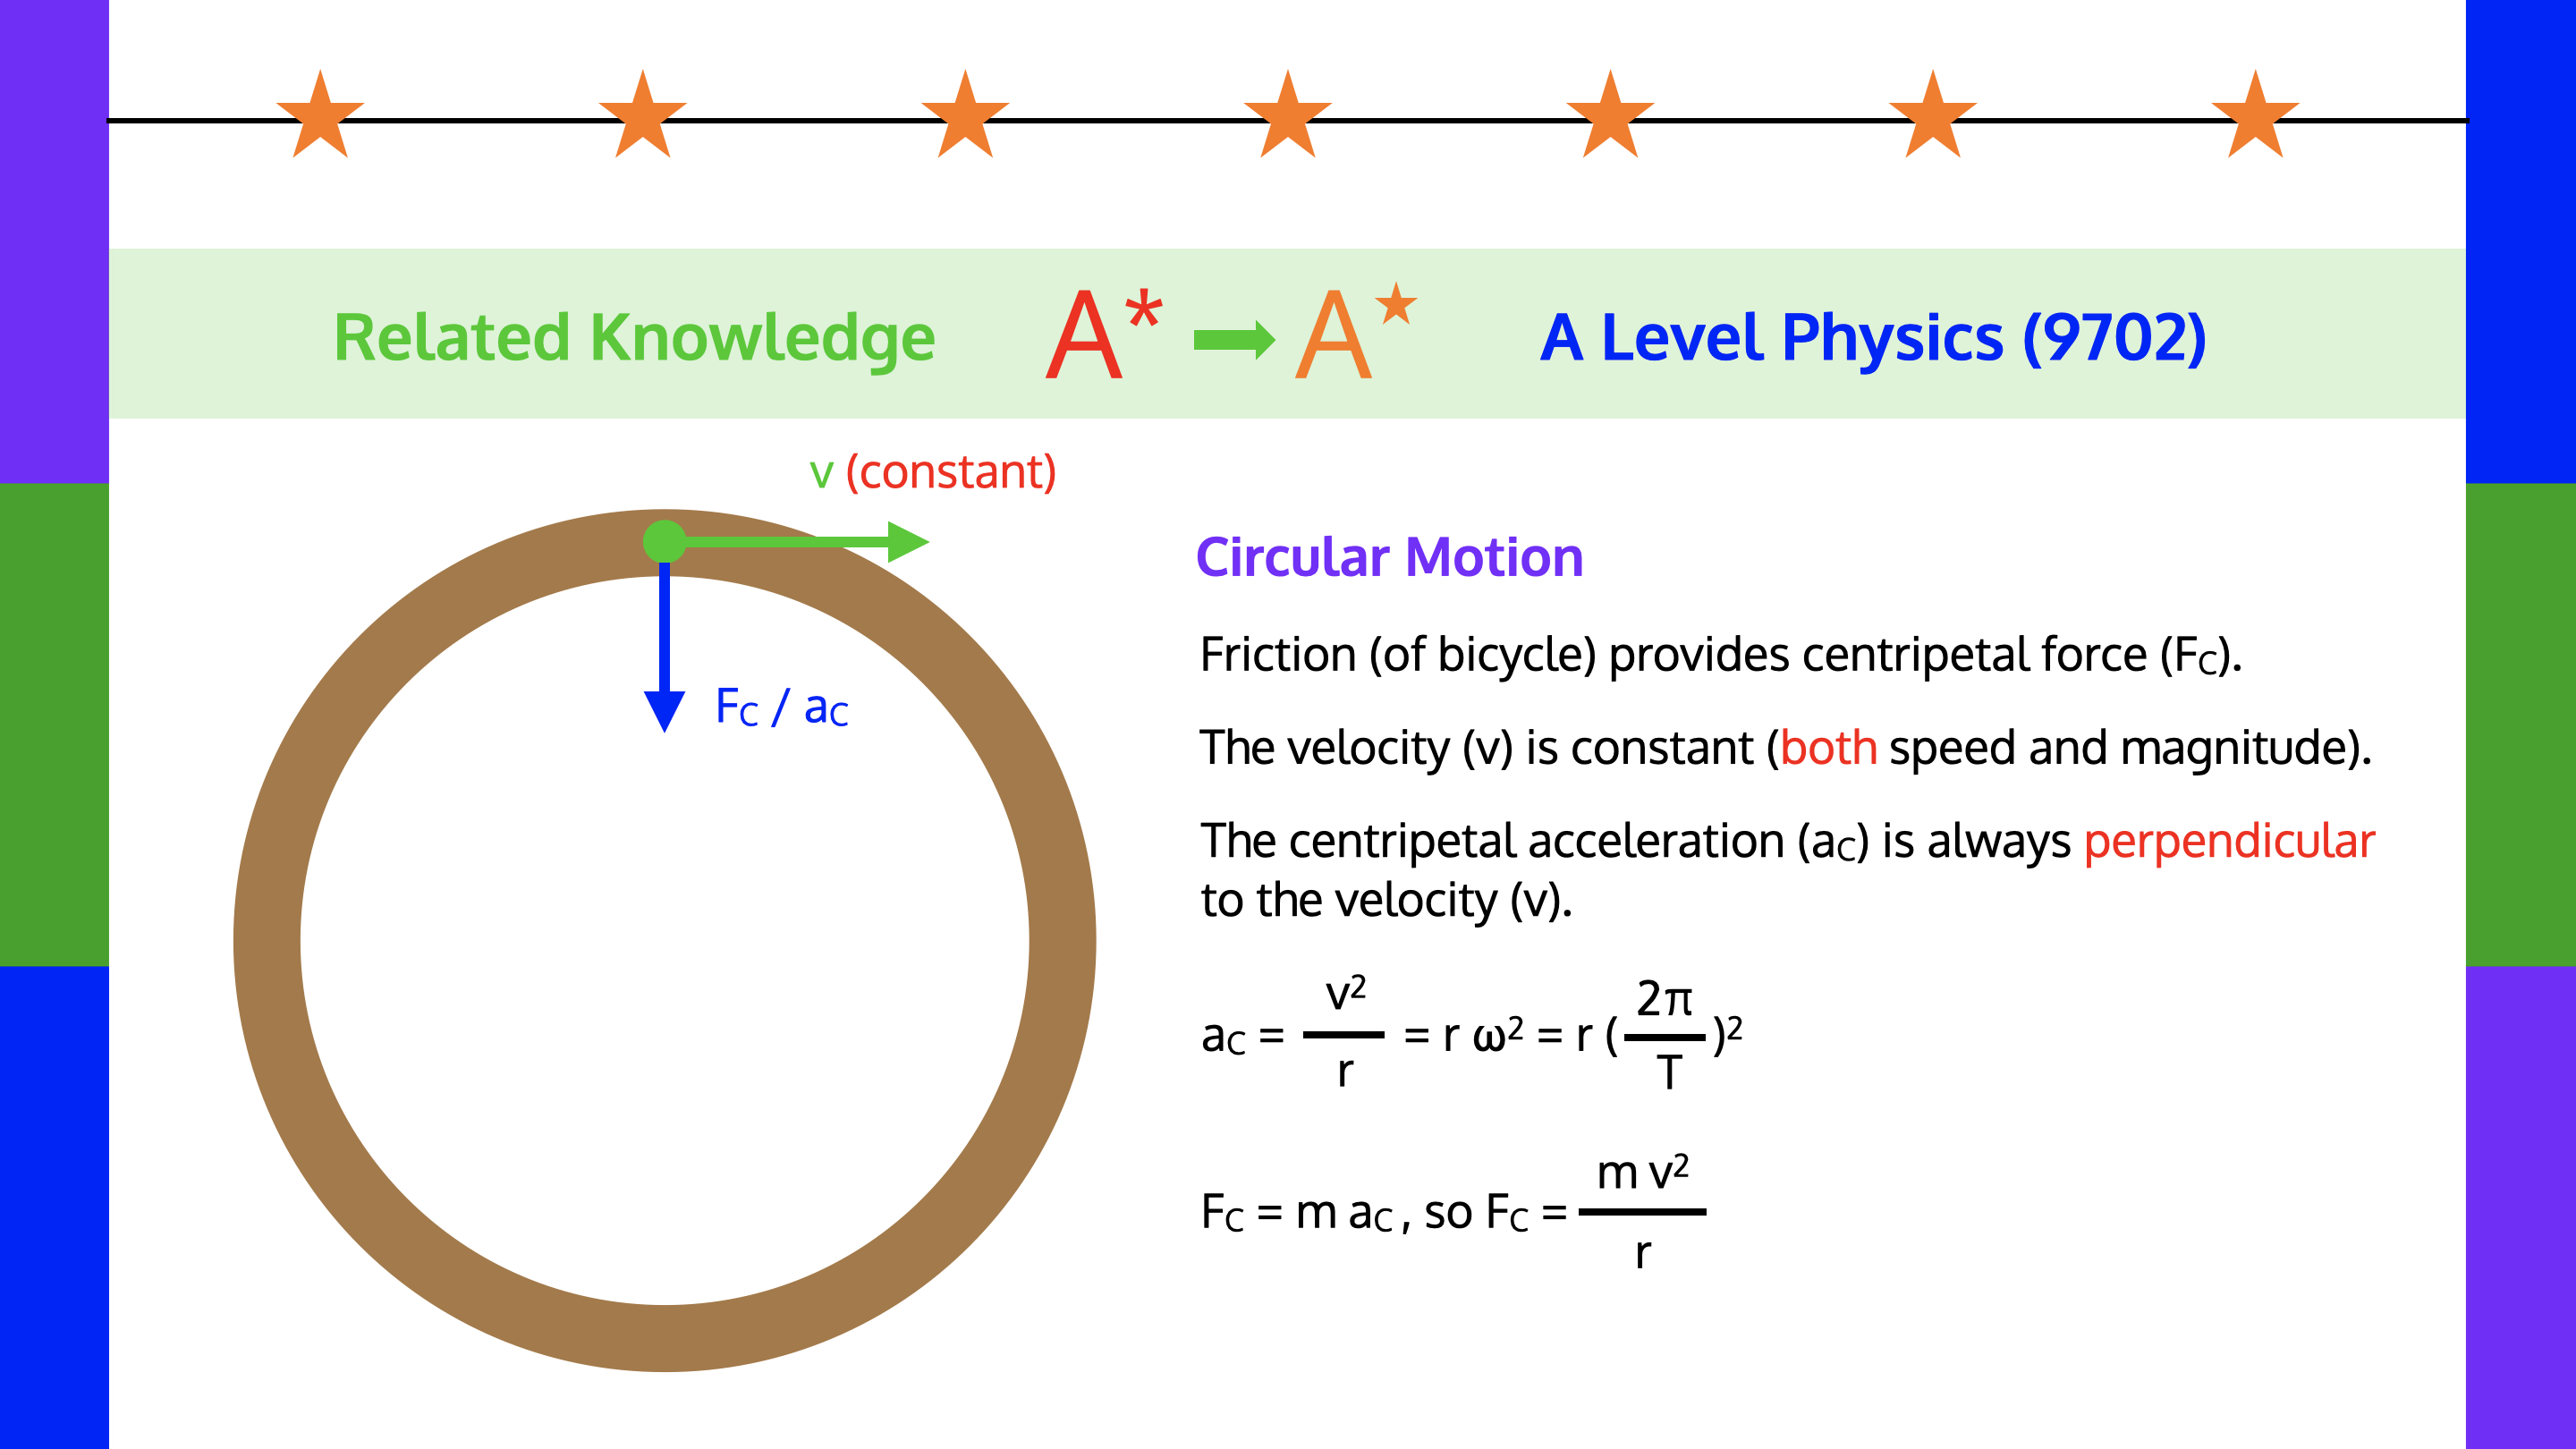 Physics (9702) Knowledge: Circular Motion